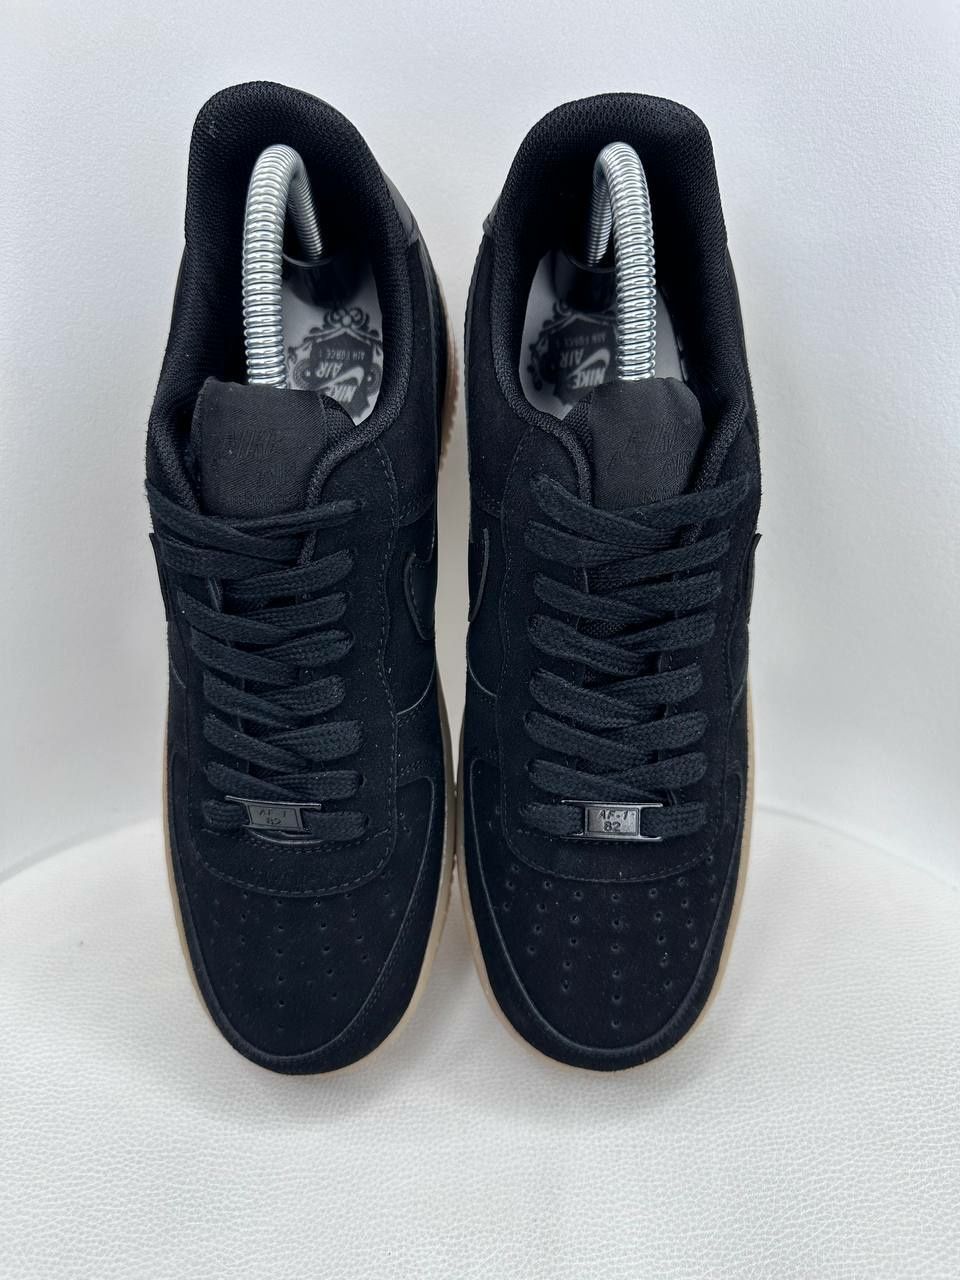 Nike air force 1 black/чоловічі кросівки/мужские кроссовки/найк/nike